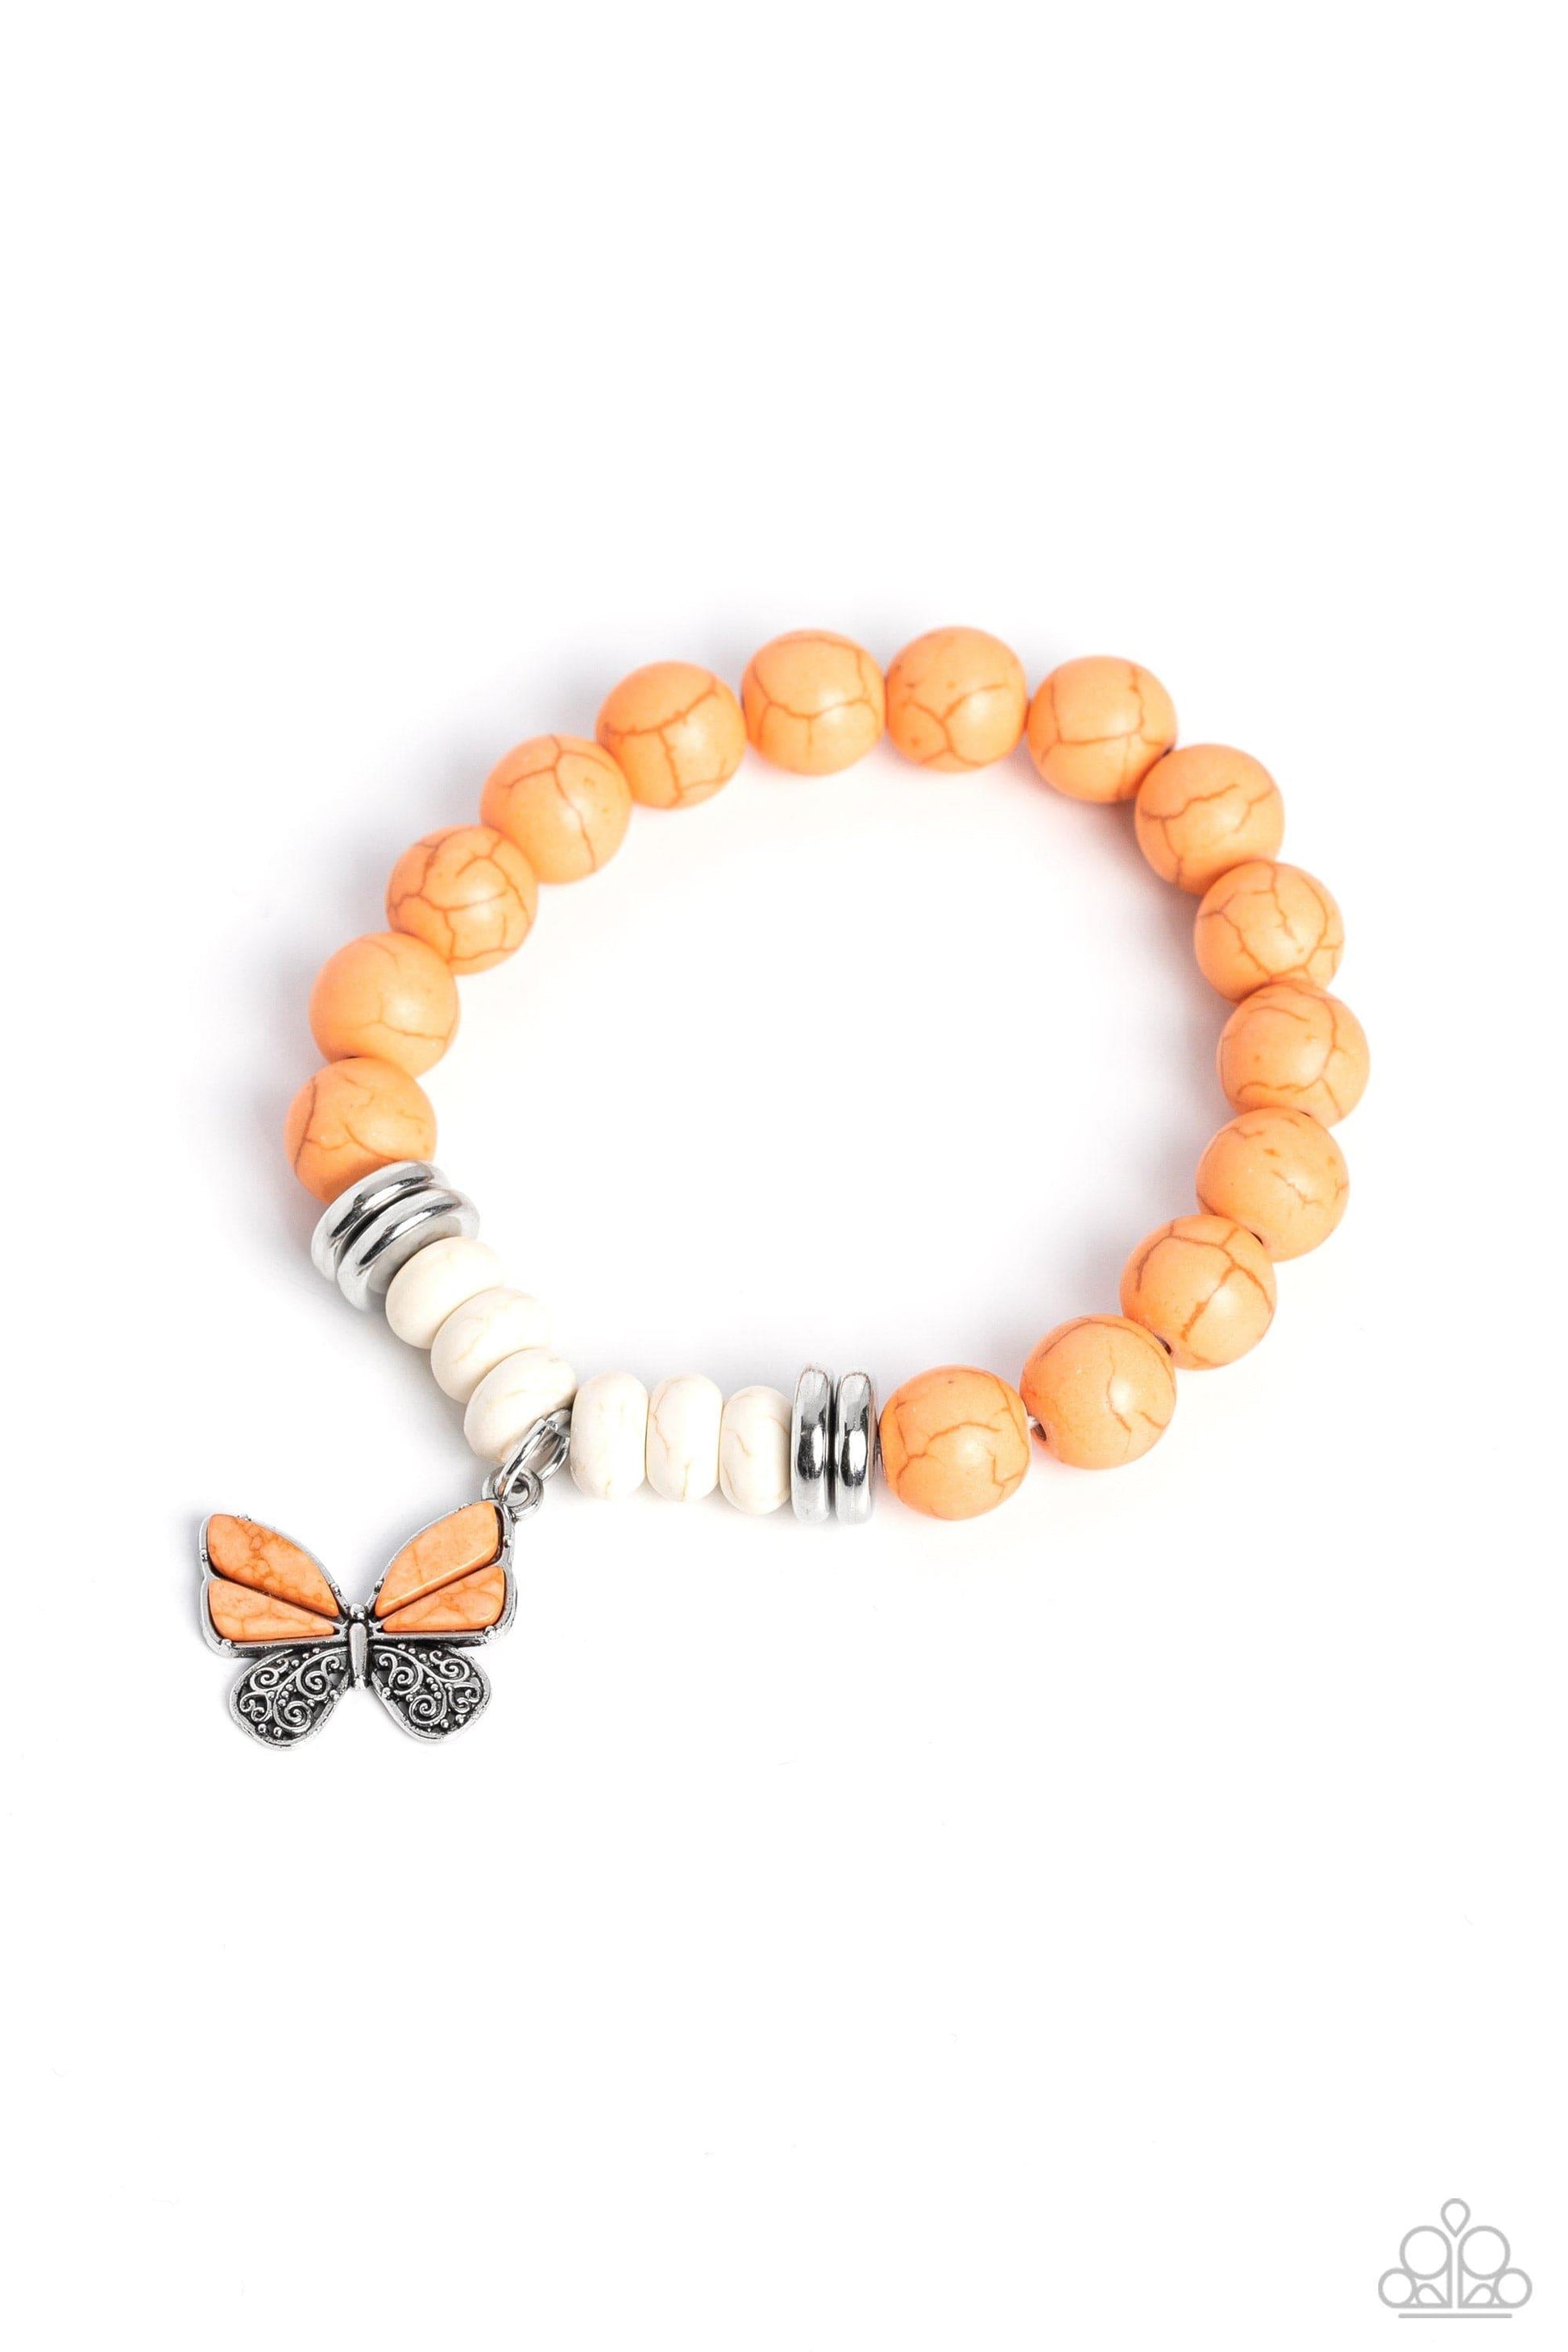 Paparazzi Accessories - Bold Butterfly - Orange Bracelet - Bling by JessieK